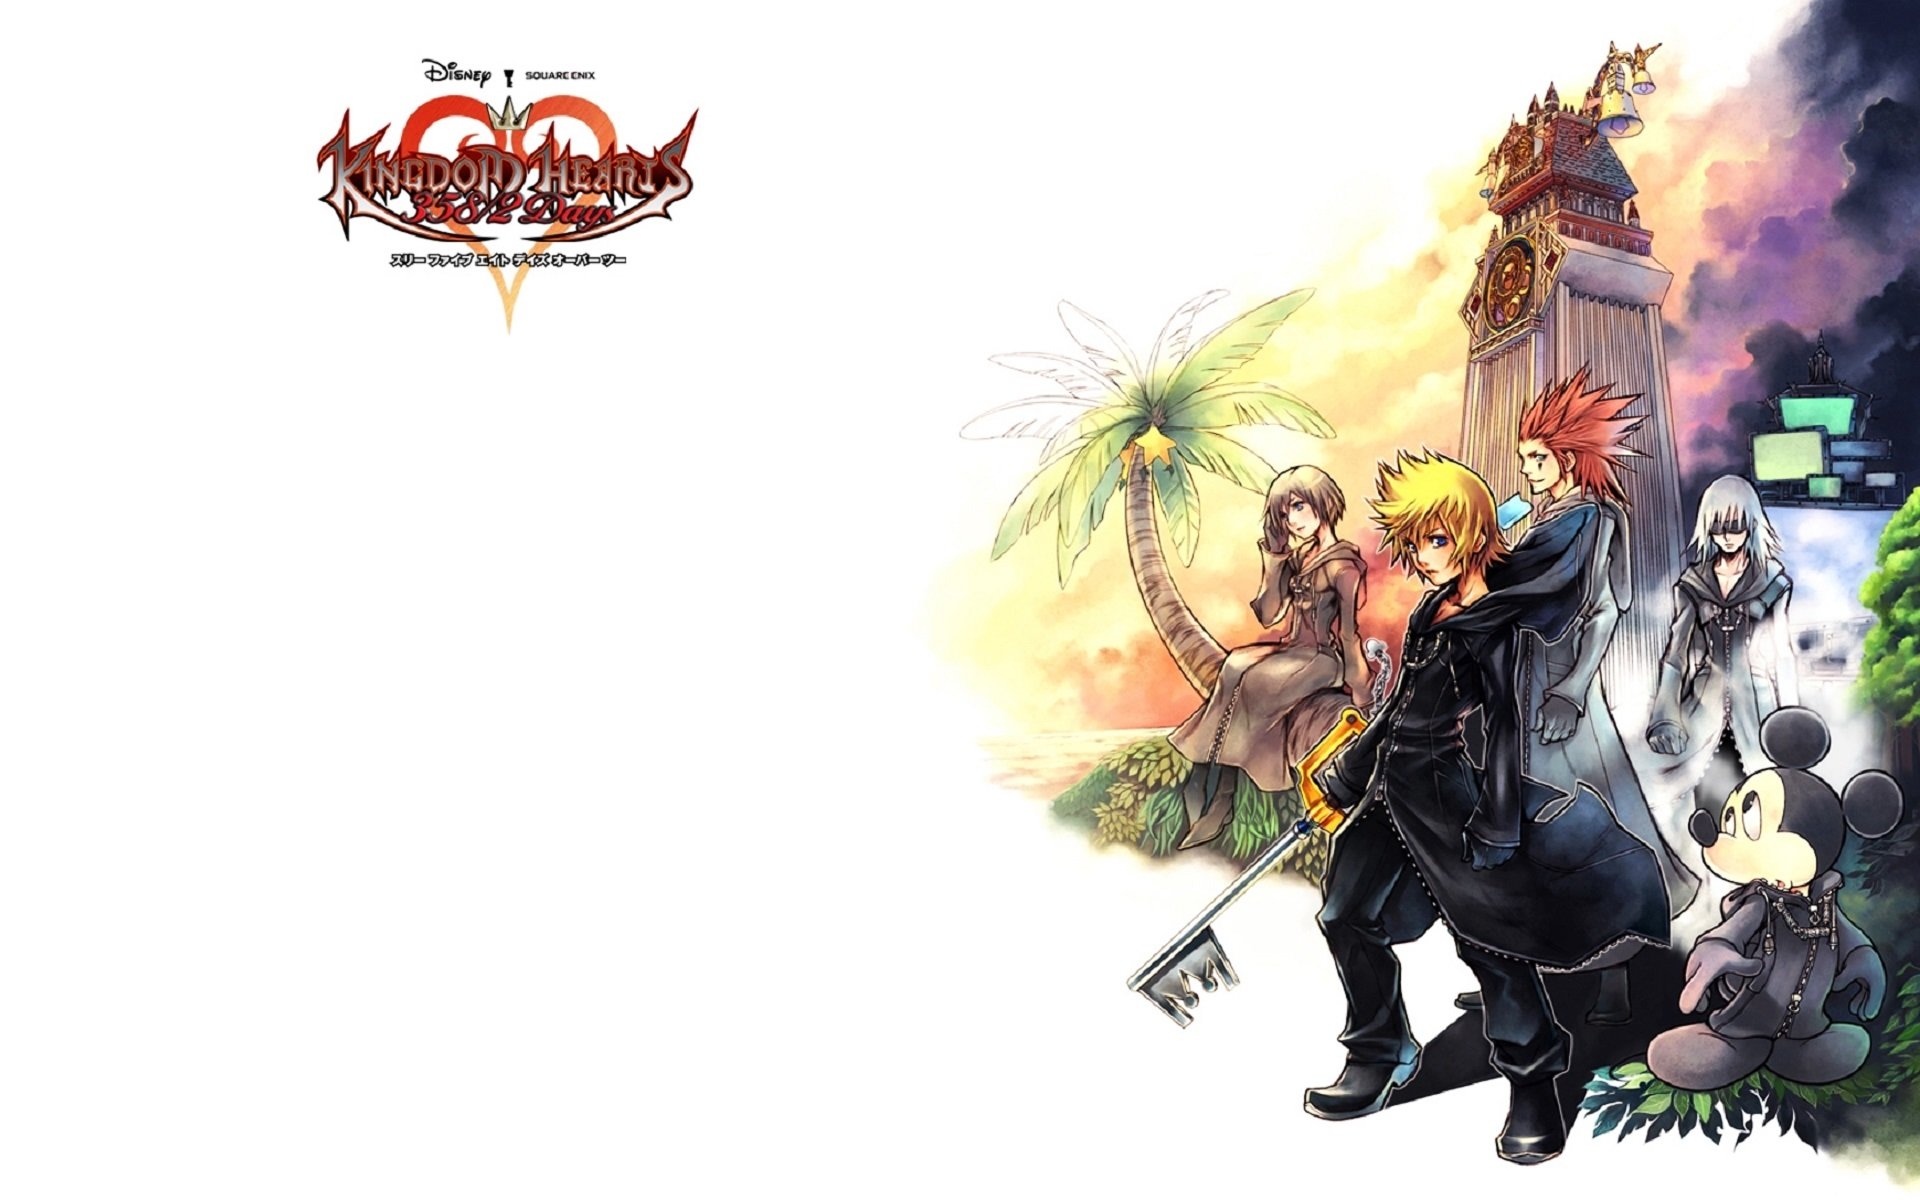 Kingdom Hearts 3582 Days HD Wallpaper Background Image